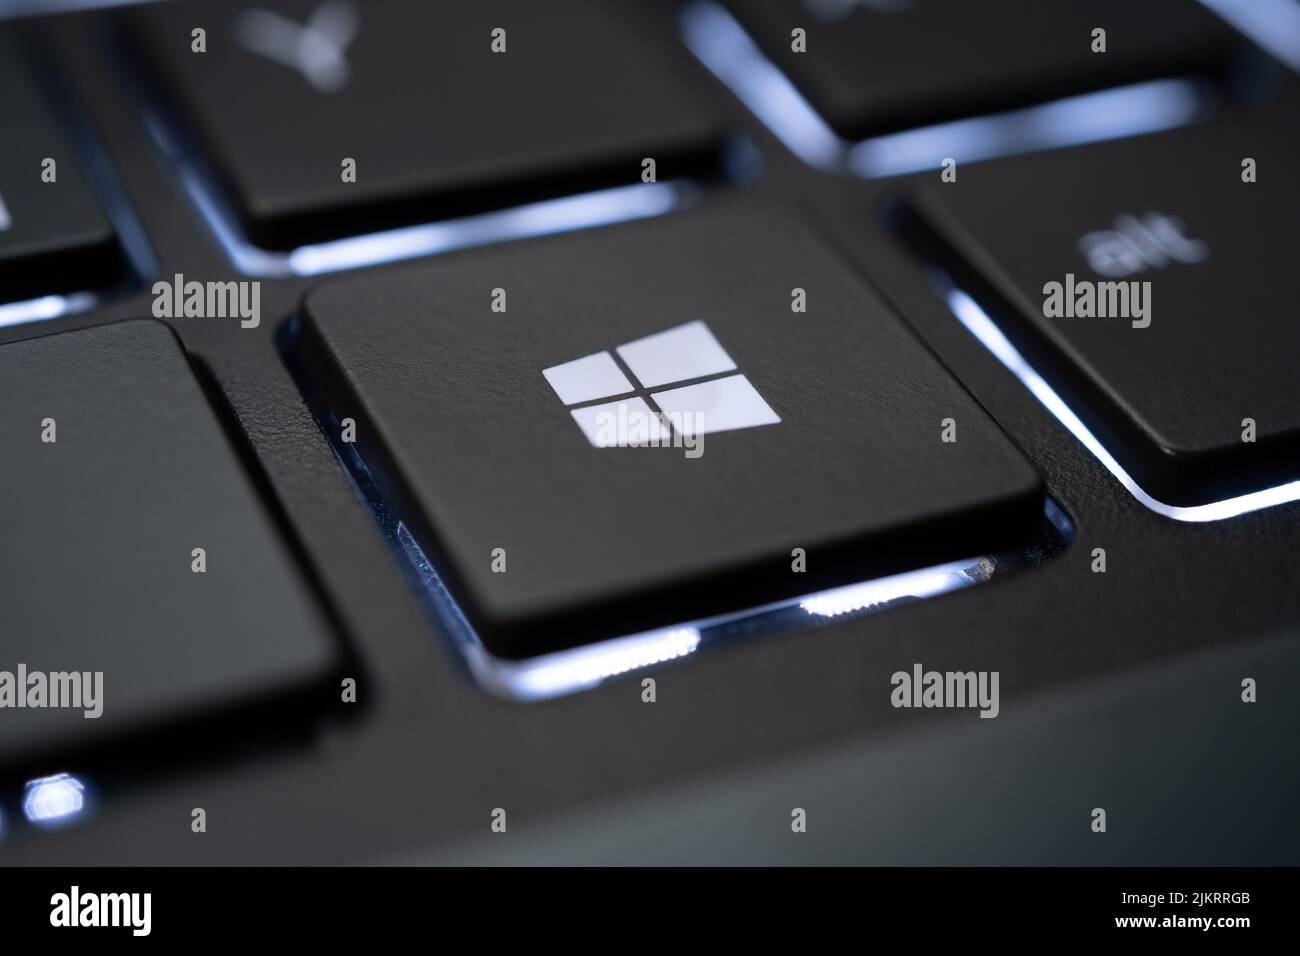 Closeup of the Windows key on an illuminated keyboard Stock Photo